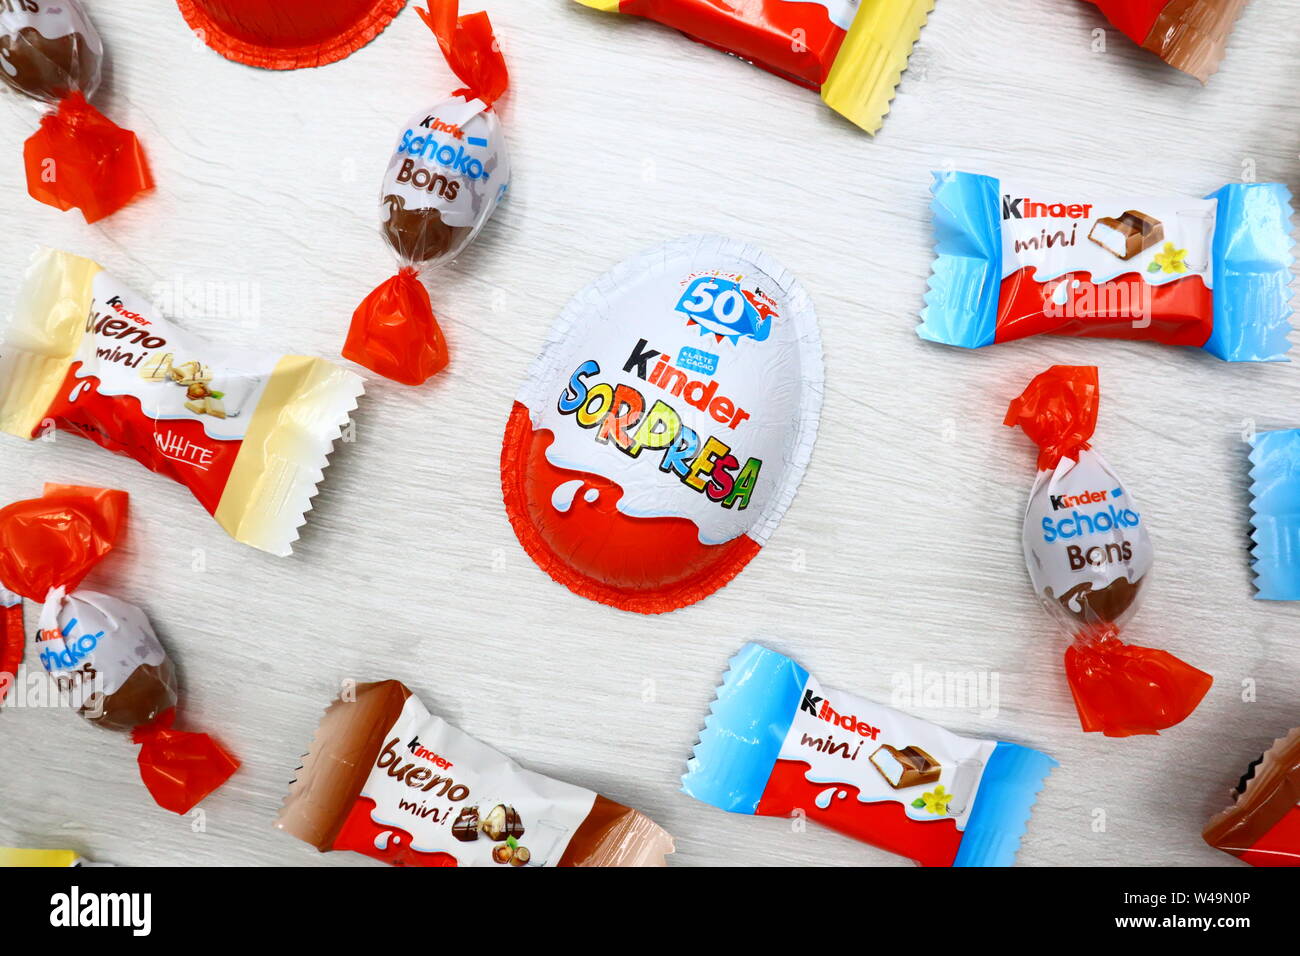 Kinder Kinder mini Bars, mini Bueno and Schoko-Bons Chocolates. Kinder is a brand of products made by Ferrero Stock Photo Alamy